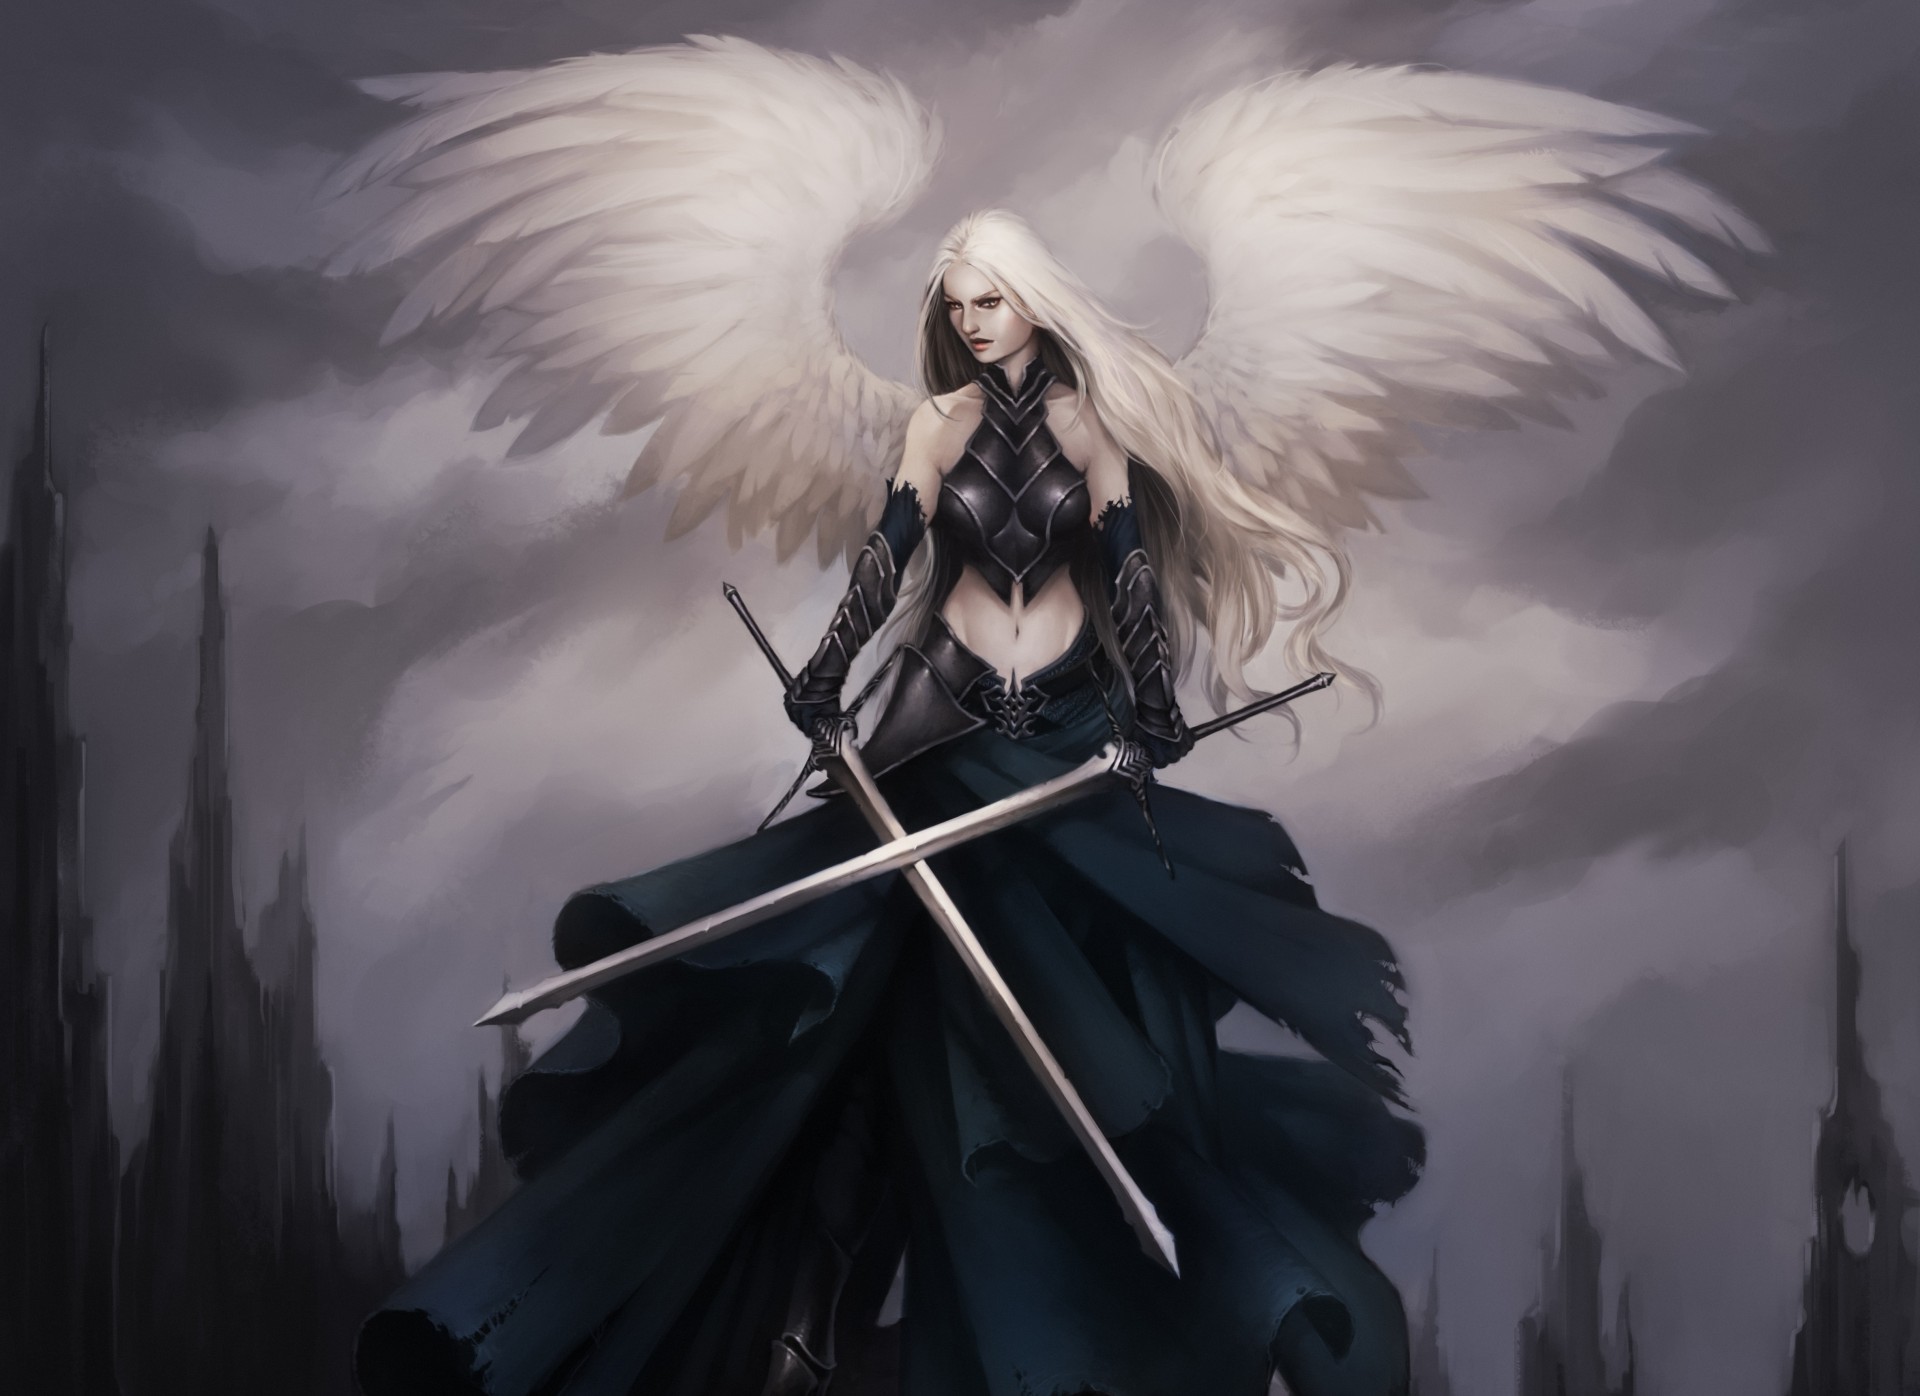 art arme fille ange épée plumes armure ailes roches